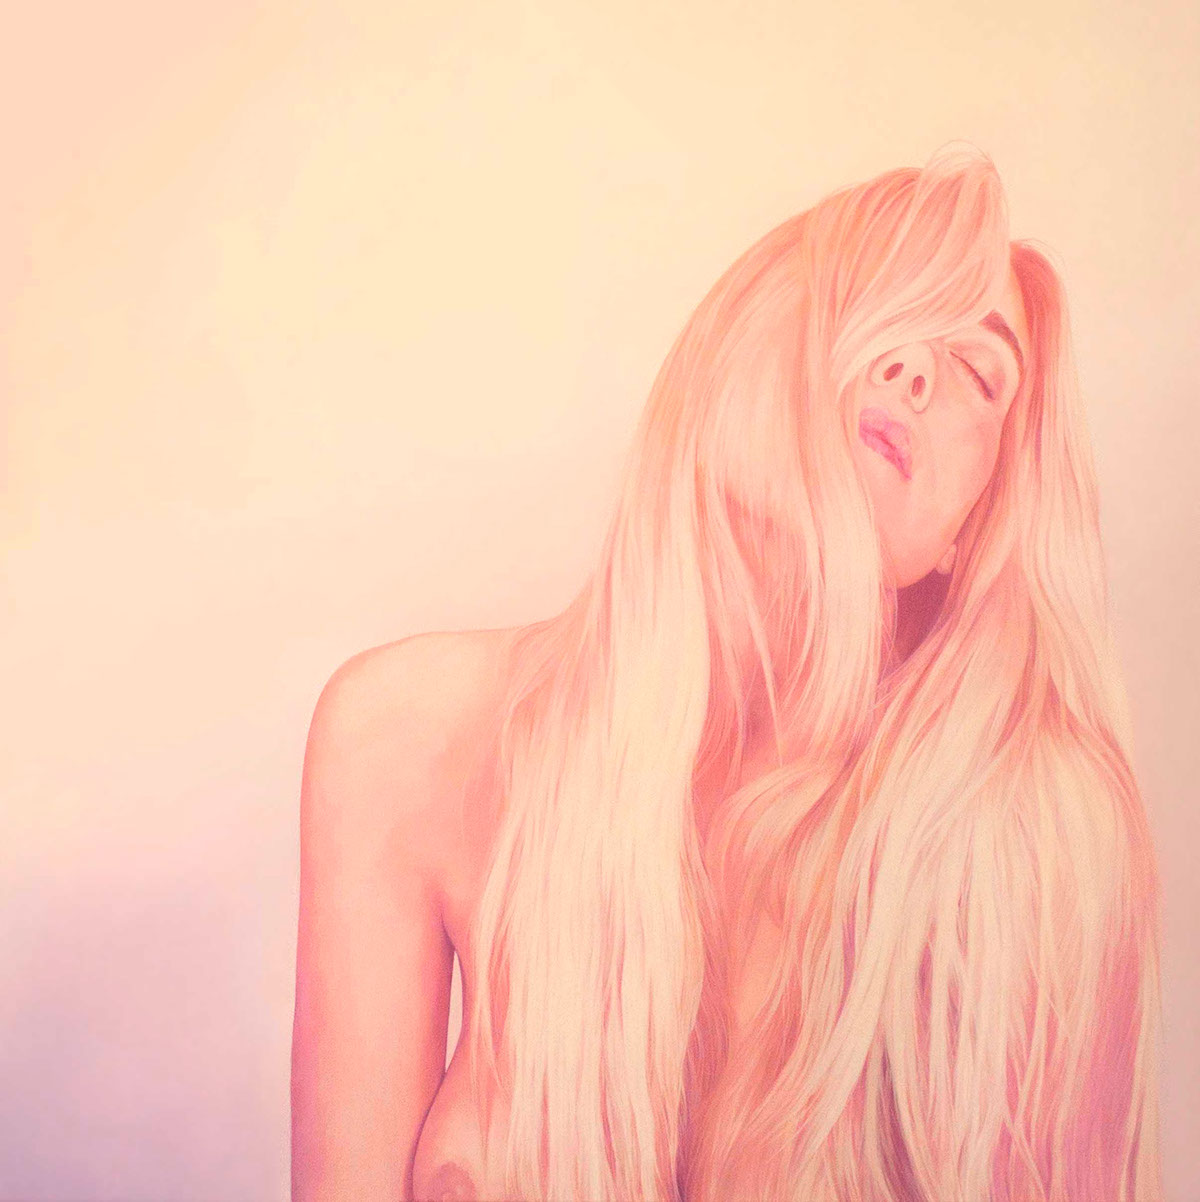 paint art portrait artist artwork hyperrealism oil erotic canvas nude woman blonde